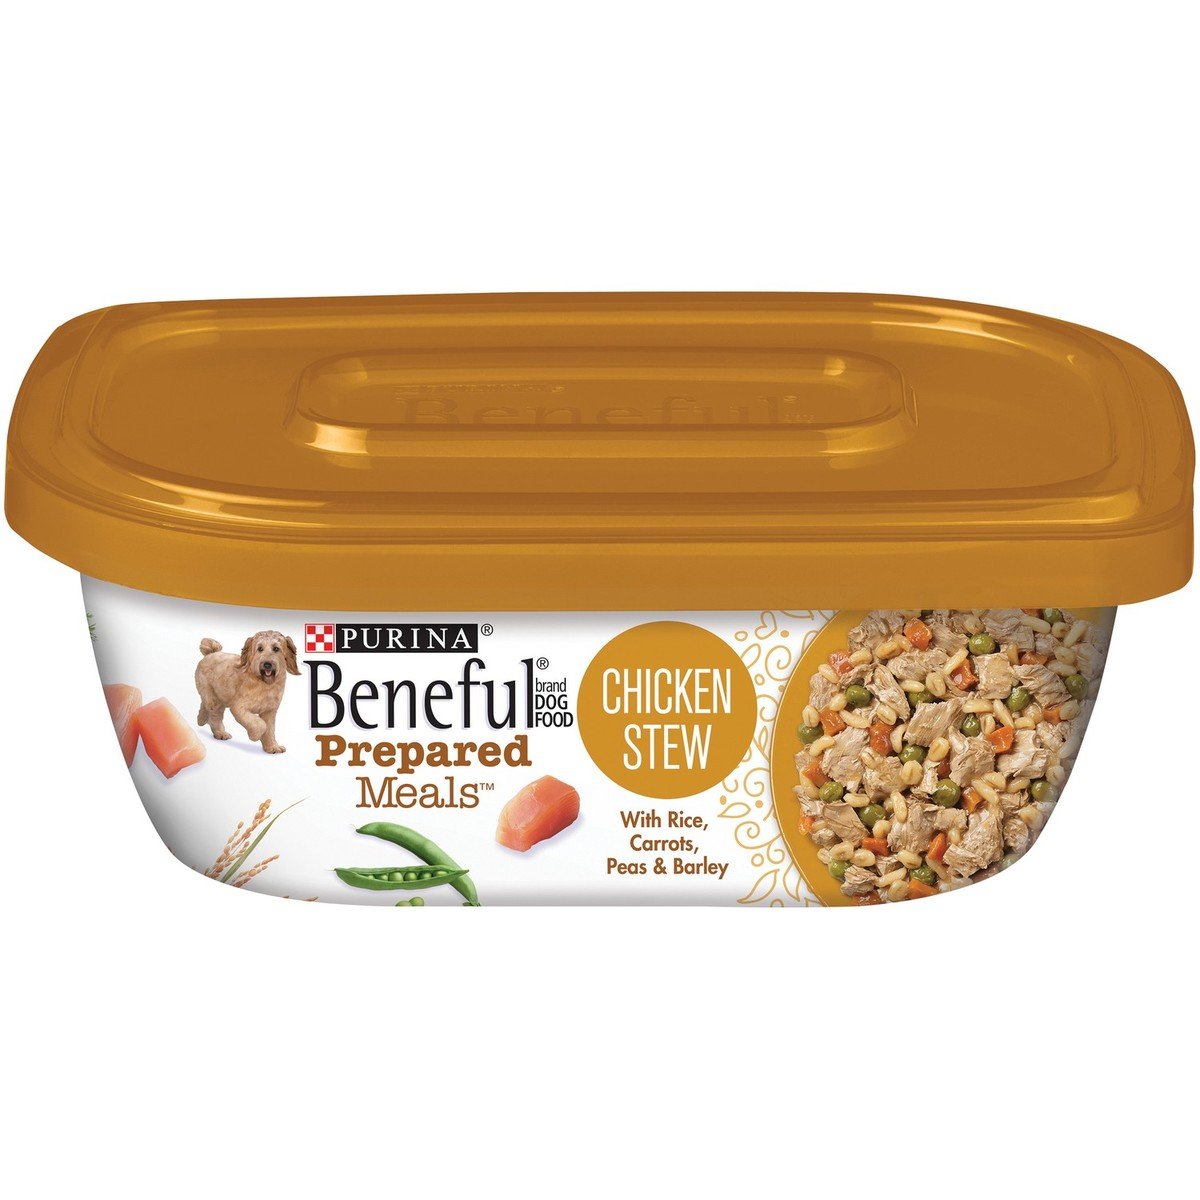 Purina Beneful Prepared Dog Food Meal Chicken Stew Tub 283 g